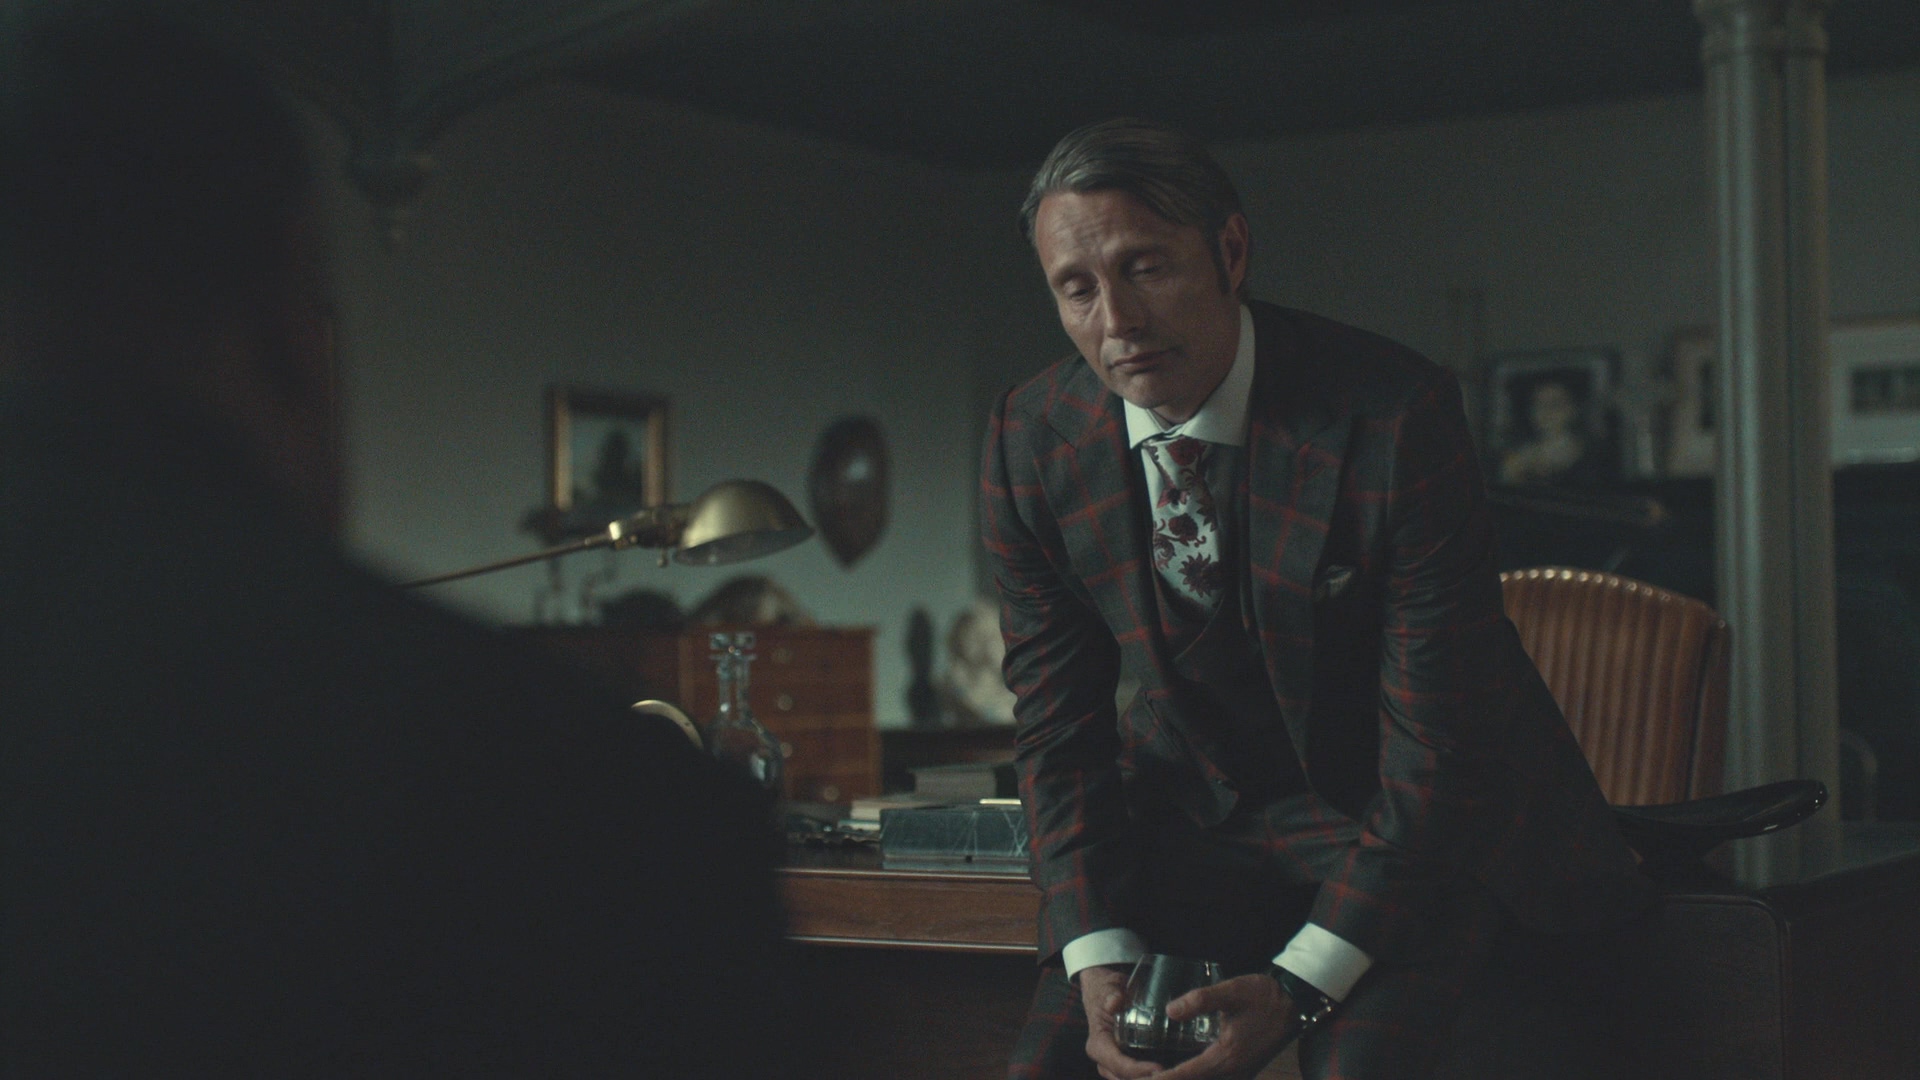 [汉尼拔].Hannibal.S02D03.2014.BluRay.1080p.AVC.DTS-HD.MA.5.1-dislike@HDSky    45.27-6.jpg